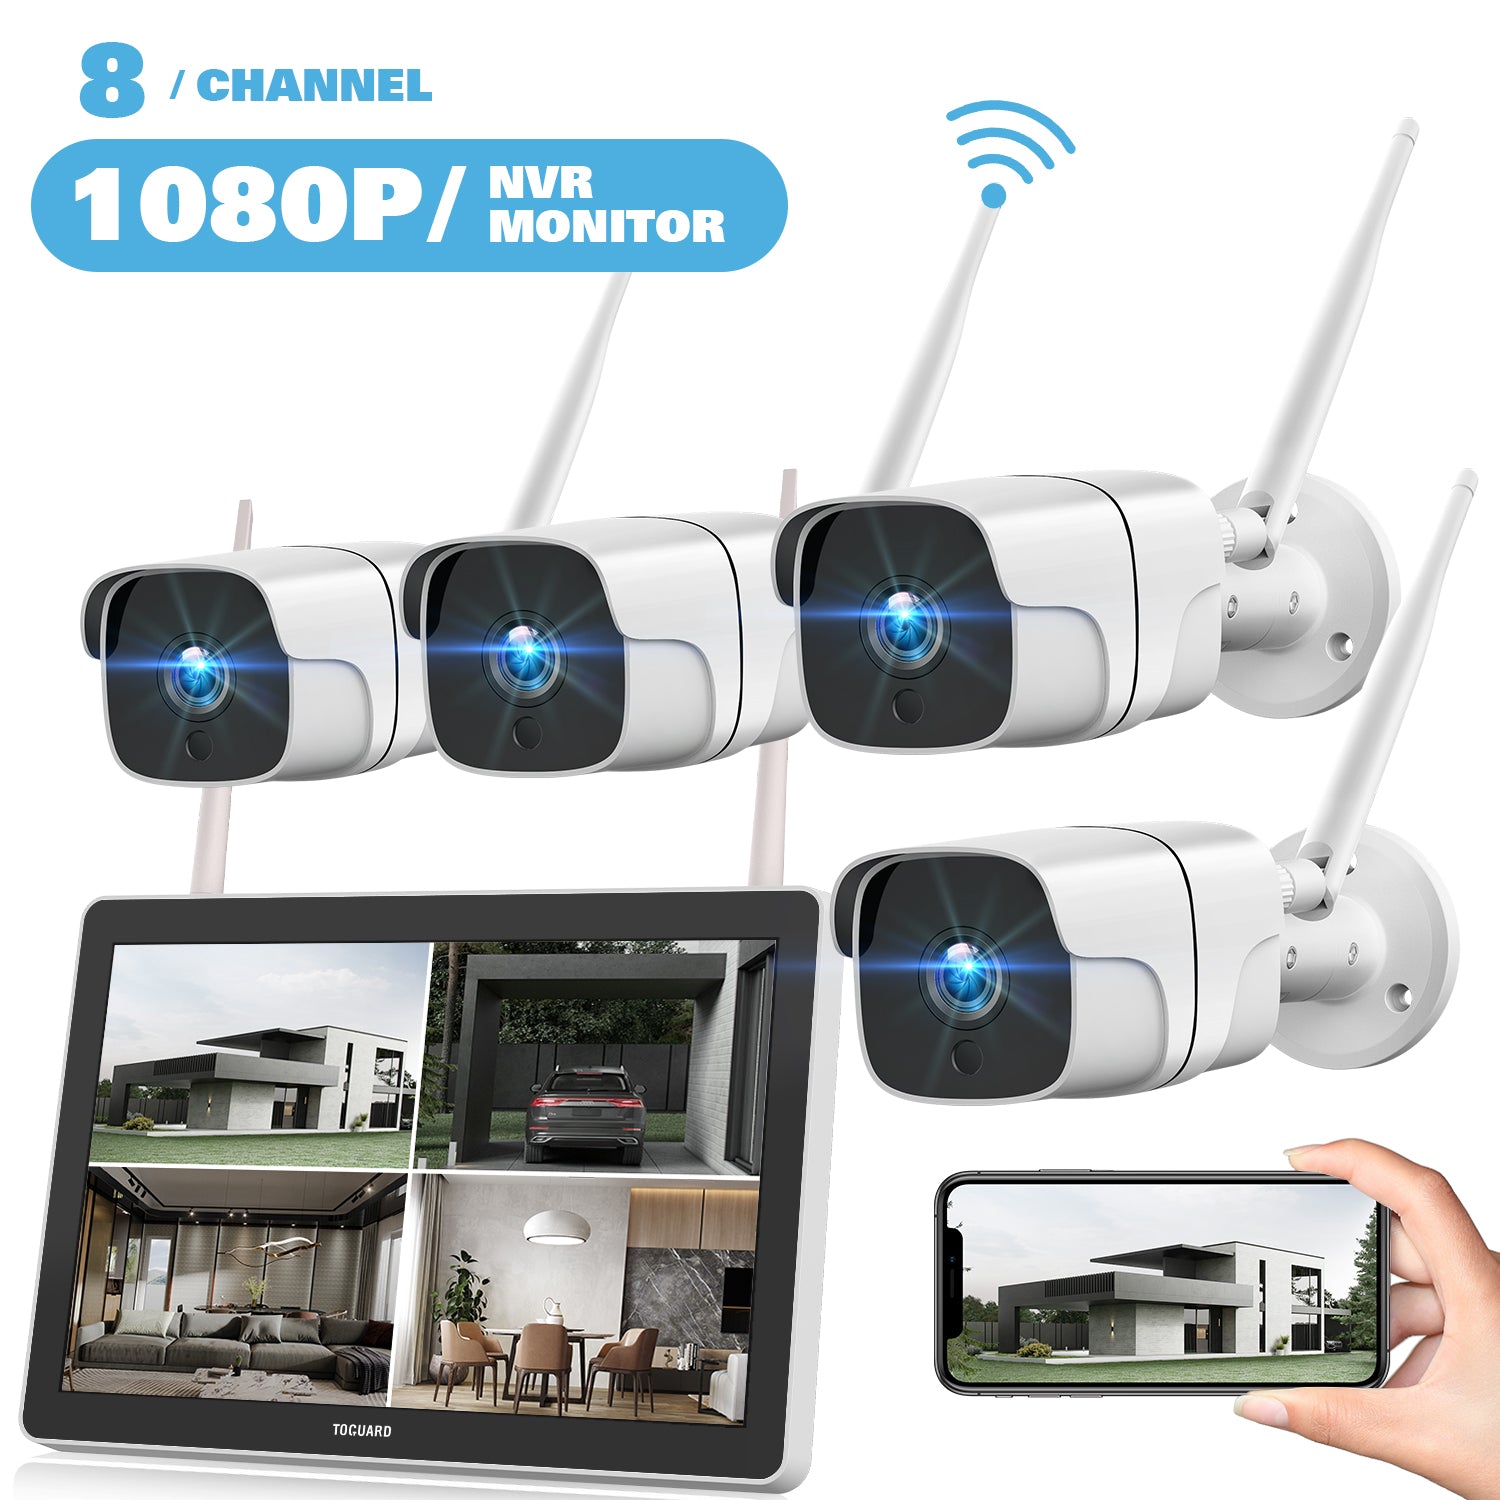 Buy Security Camera Online, Toguard W400 Security Camera